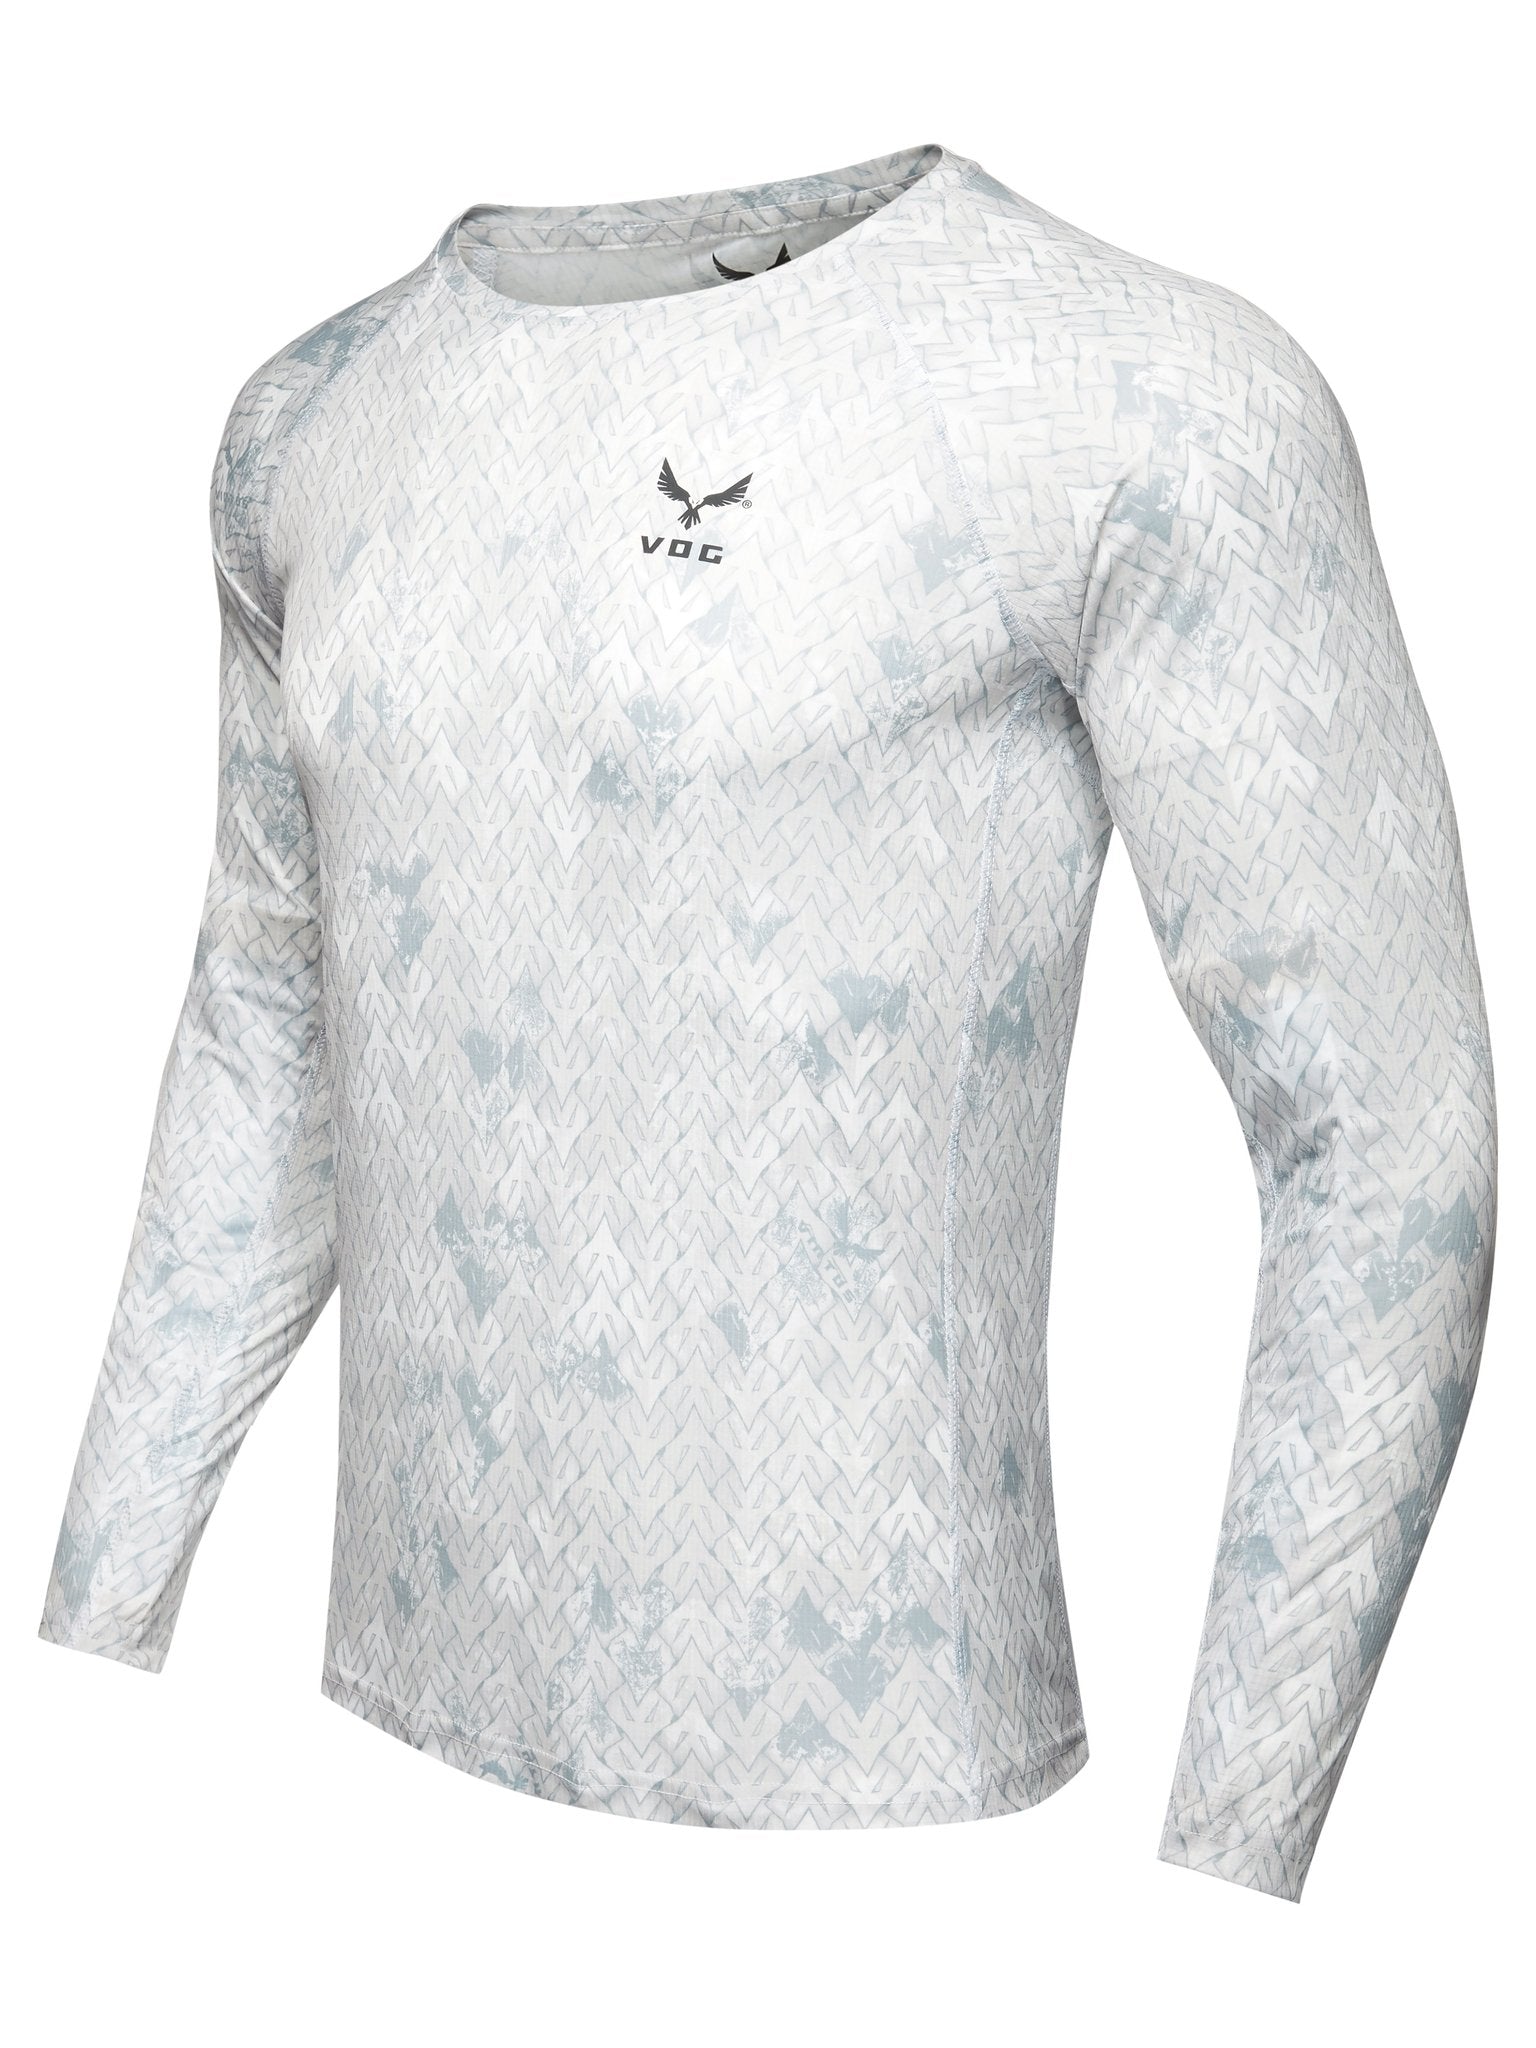 Scott Long Sleeve Shirt - Boreas